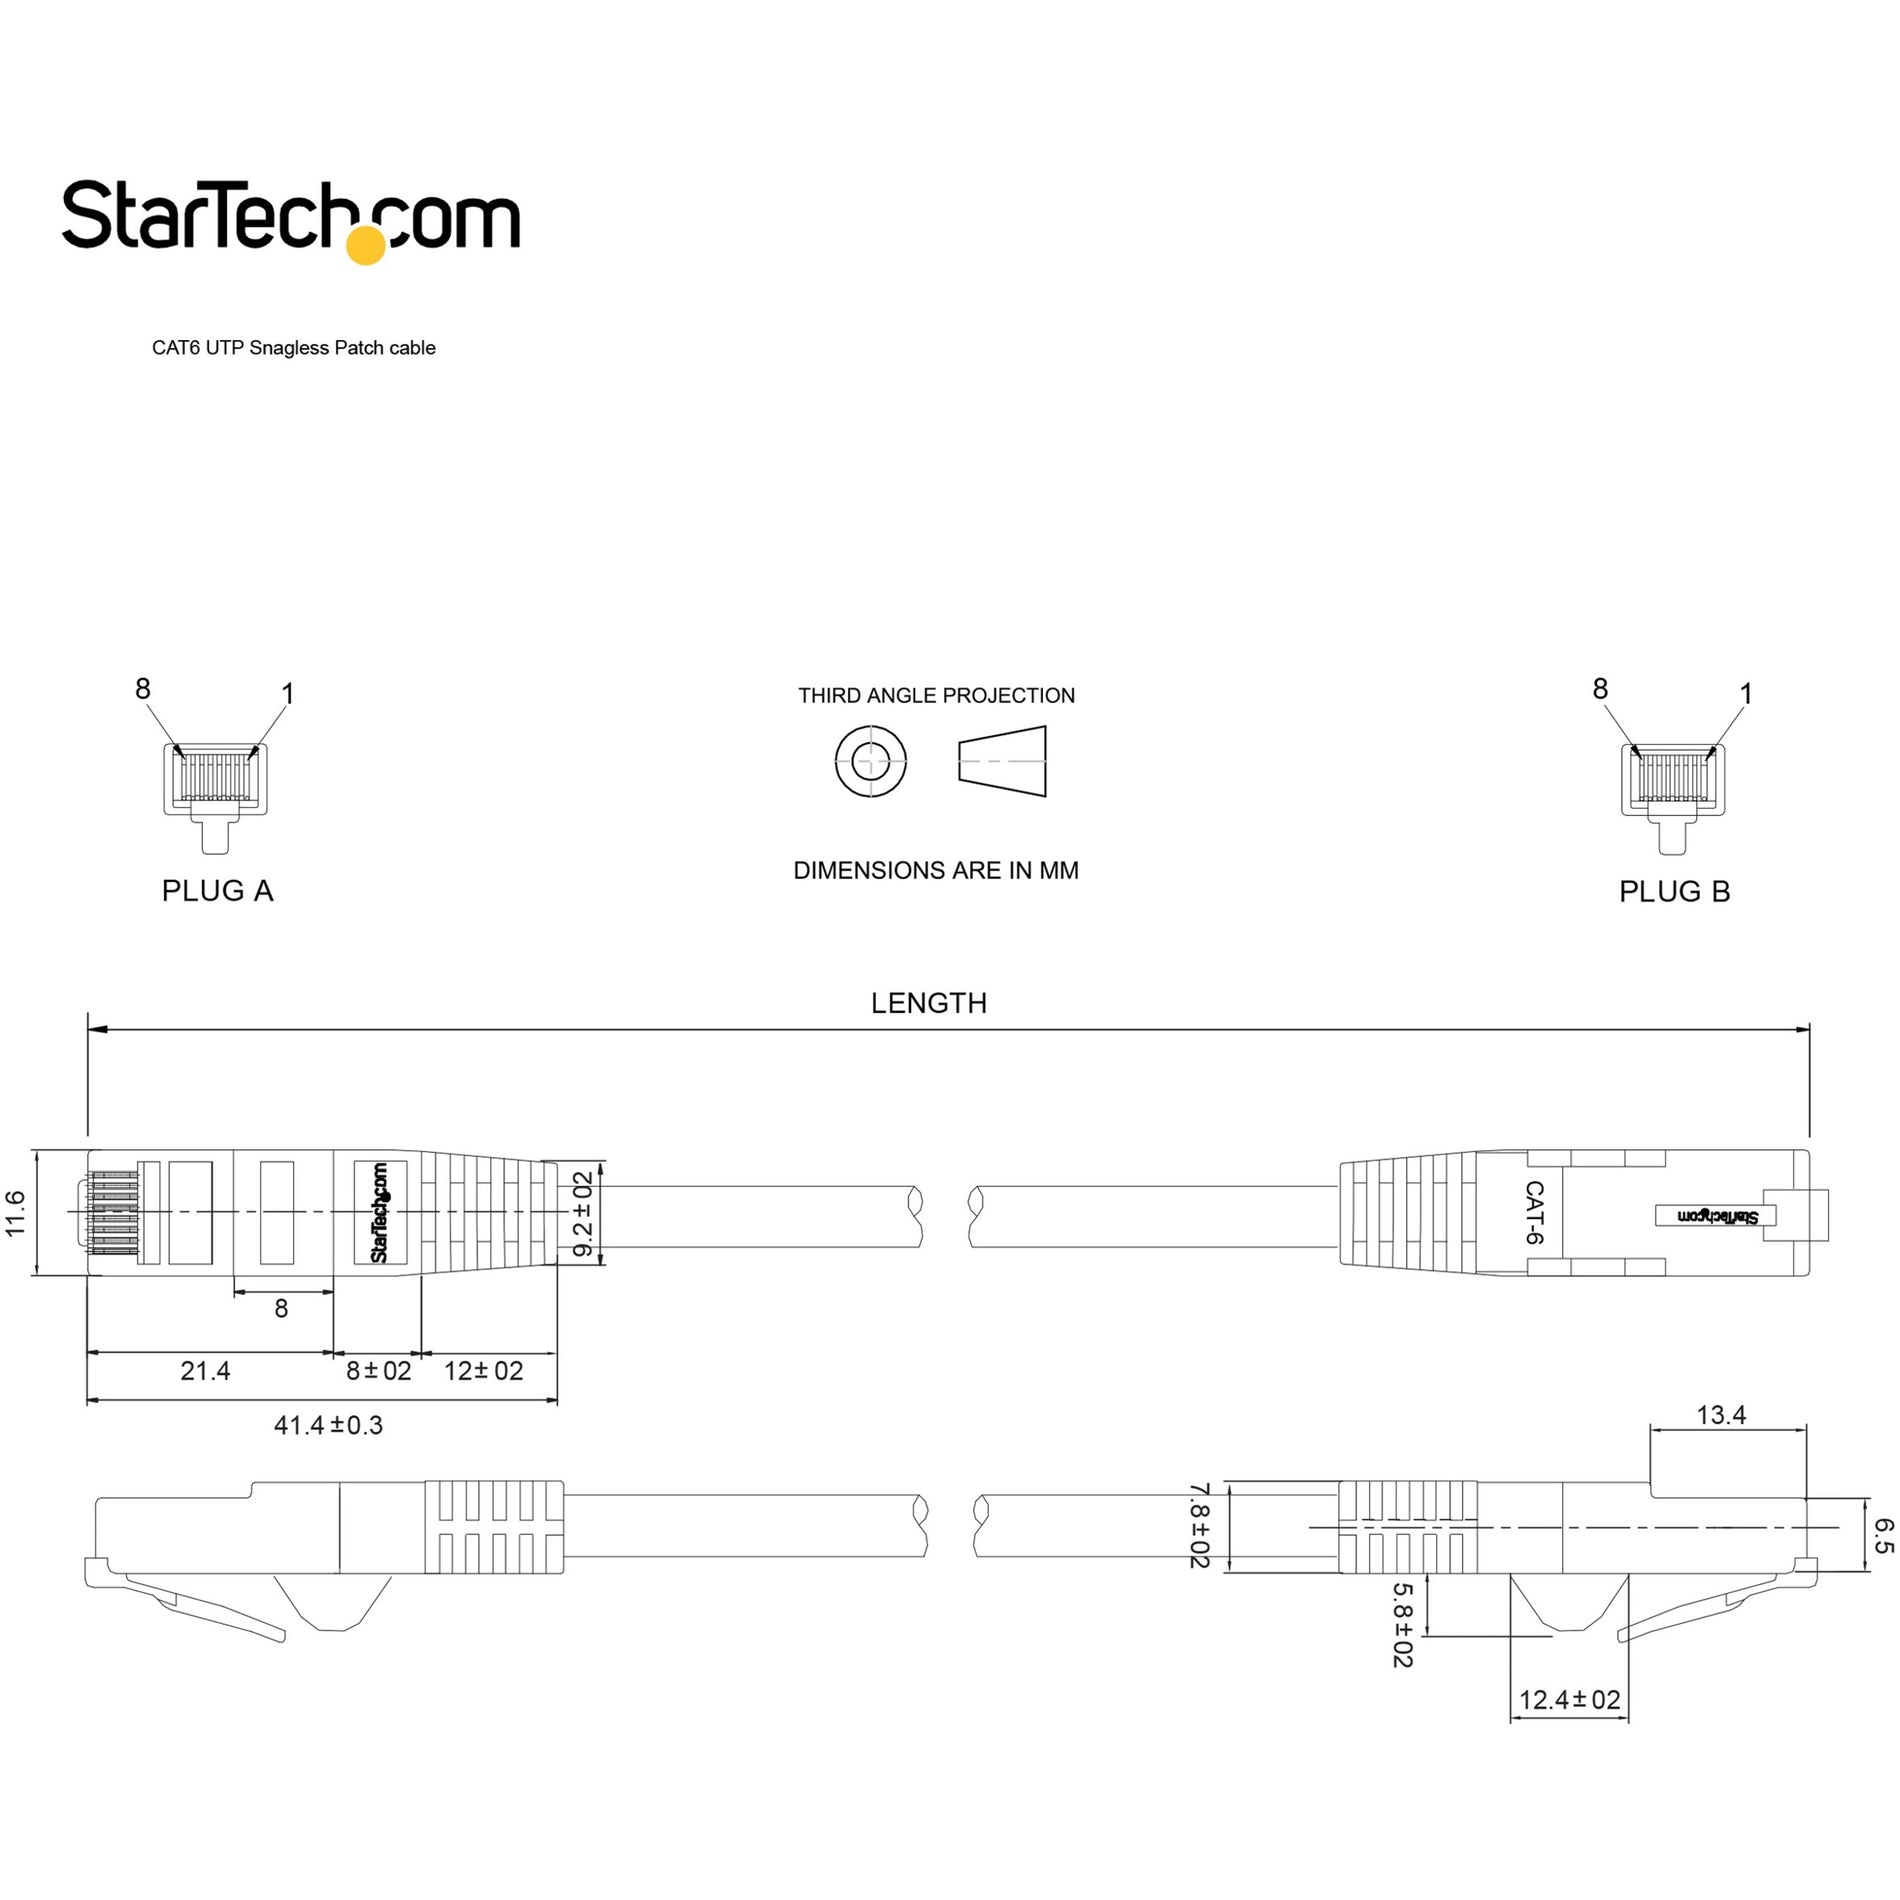 StarTech.com N6PATCH6GR Cat6 ケーブル、6フィート グレー イーサネット ケーブル、スナッグレス RJ45 コネクタ  スターテック・ドットコム